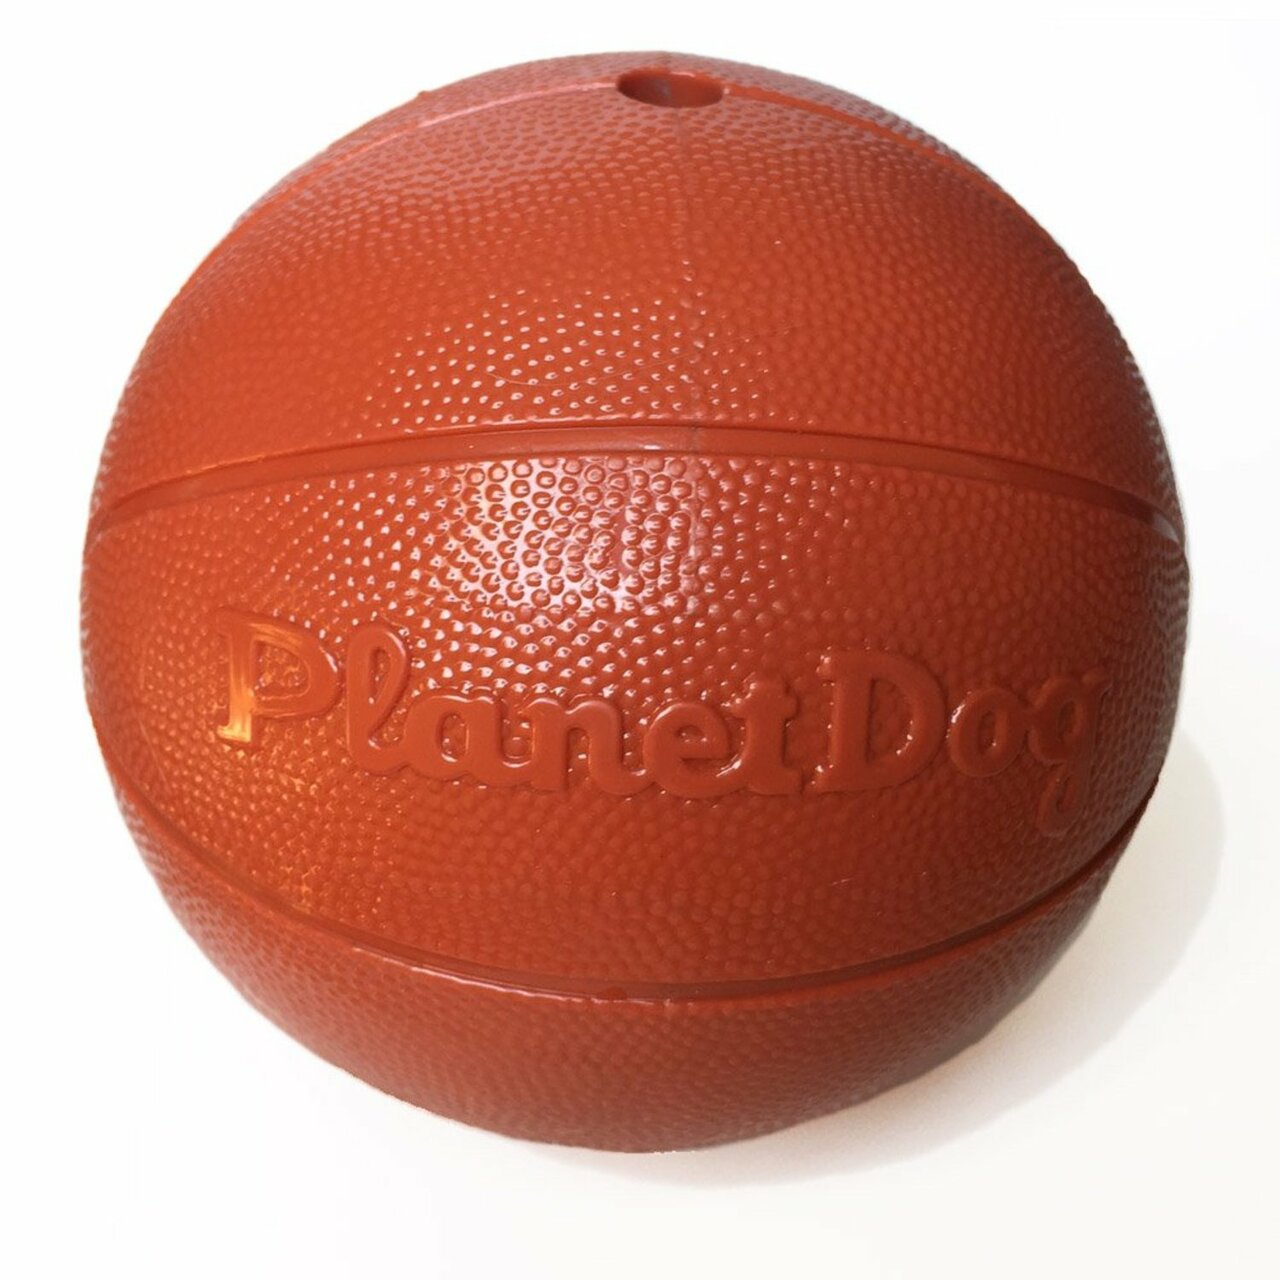 Orbee Tuff Sports Balls Basketball Image